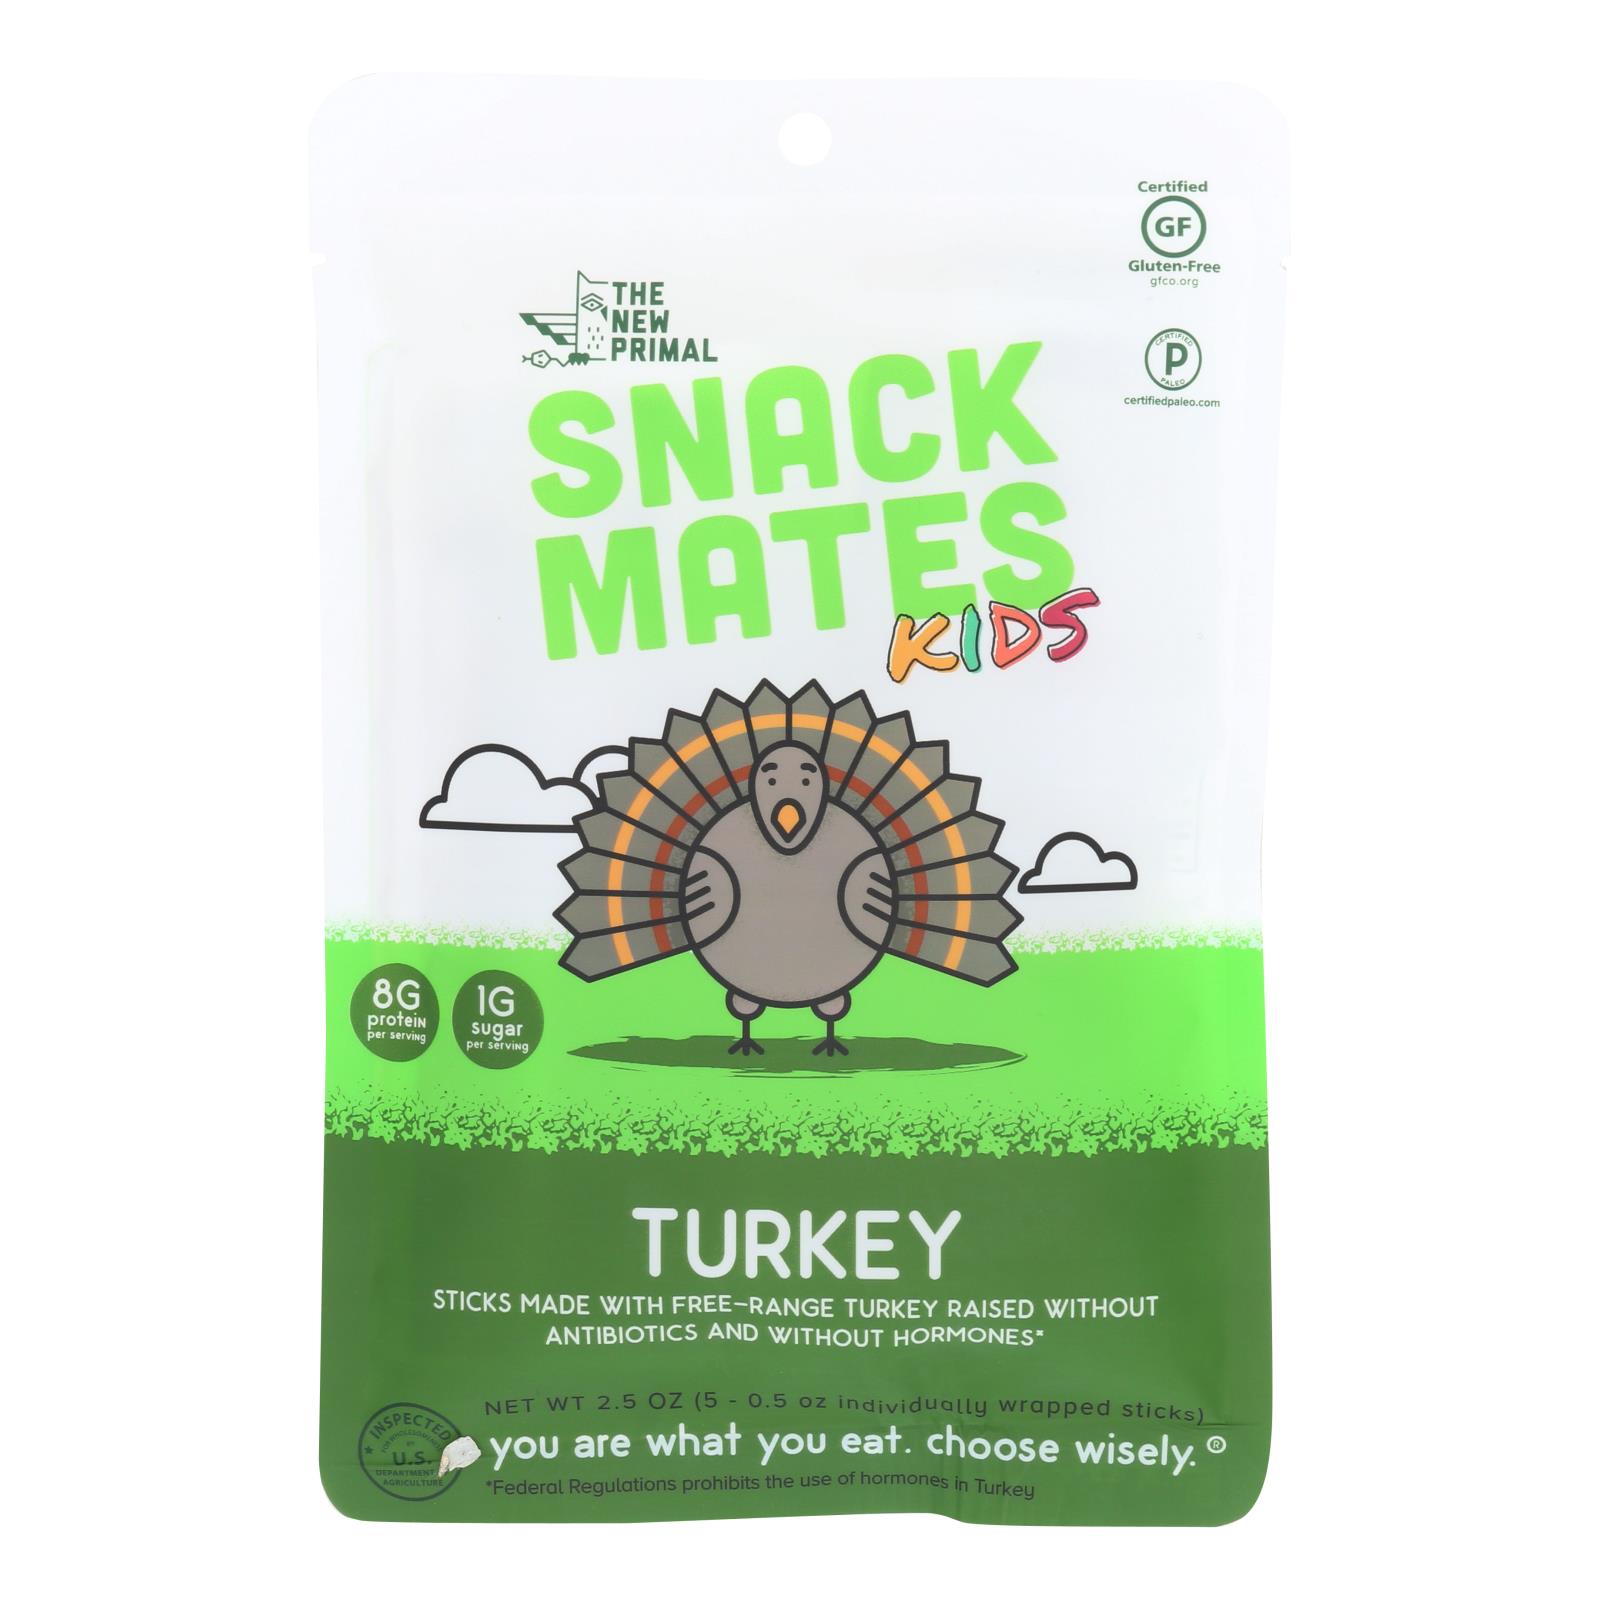 The New Primal Snack Mates Turkey Sticks - 8개 묶음상품 - 2.5 OZ